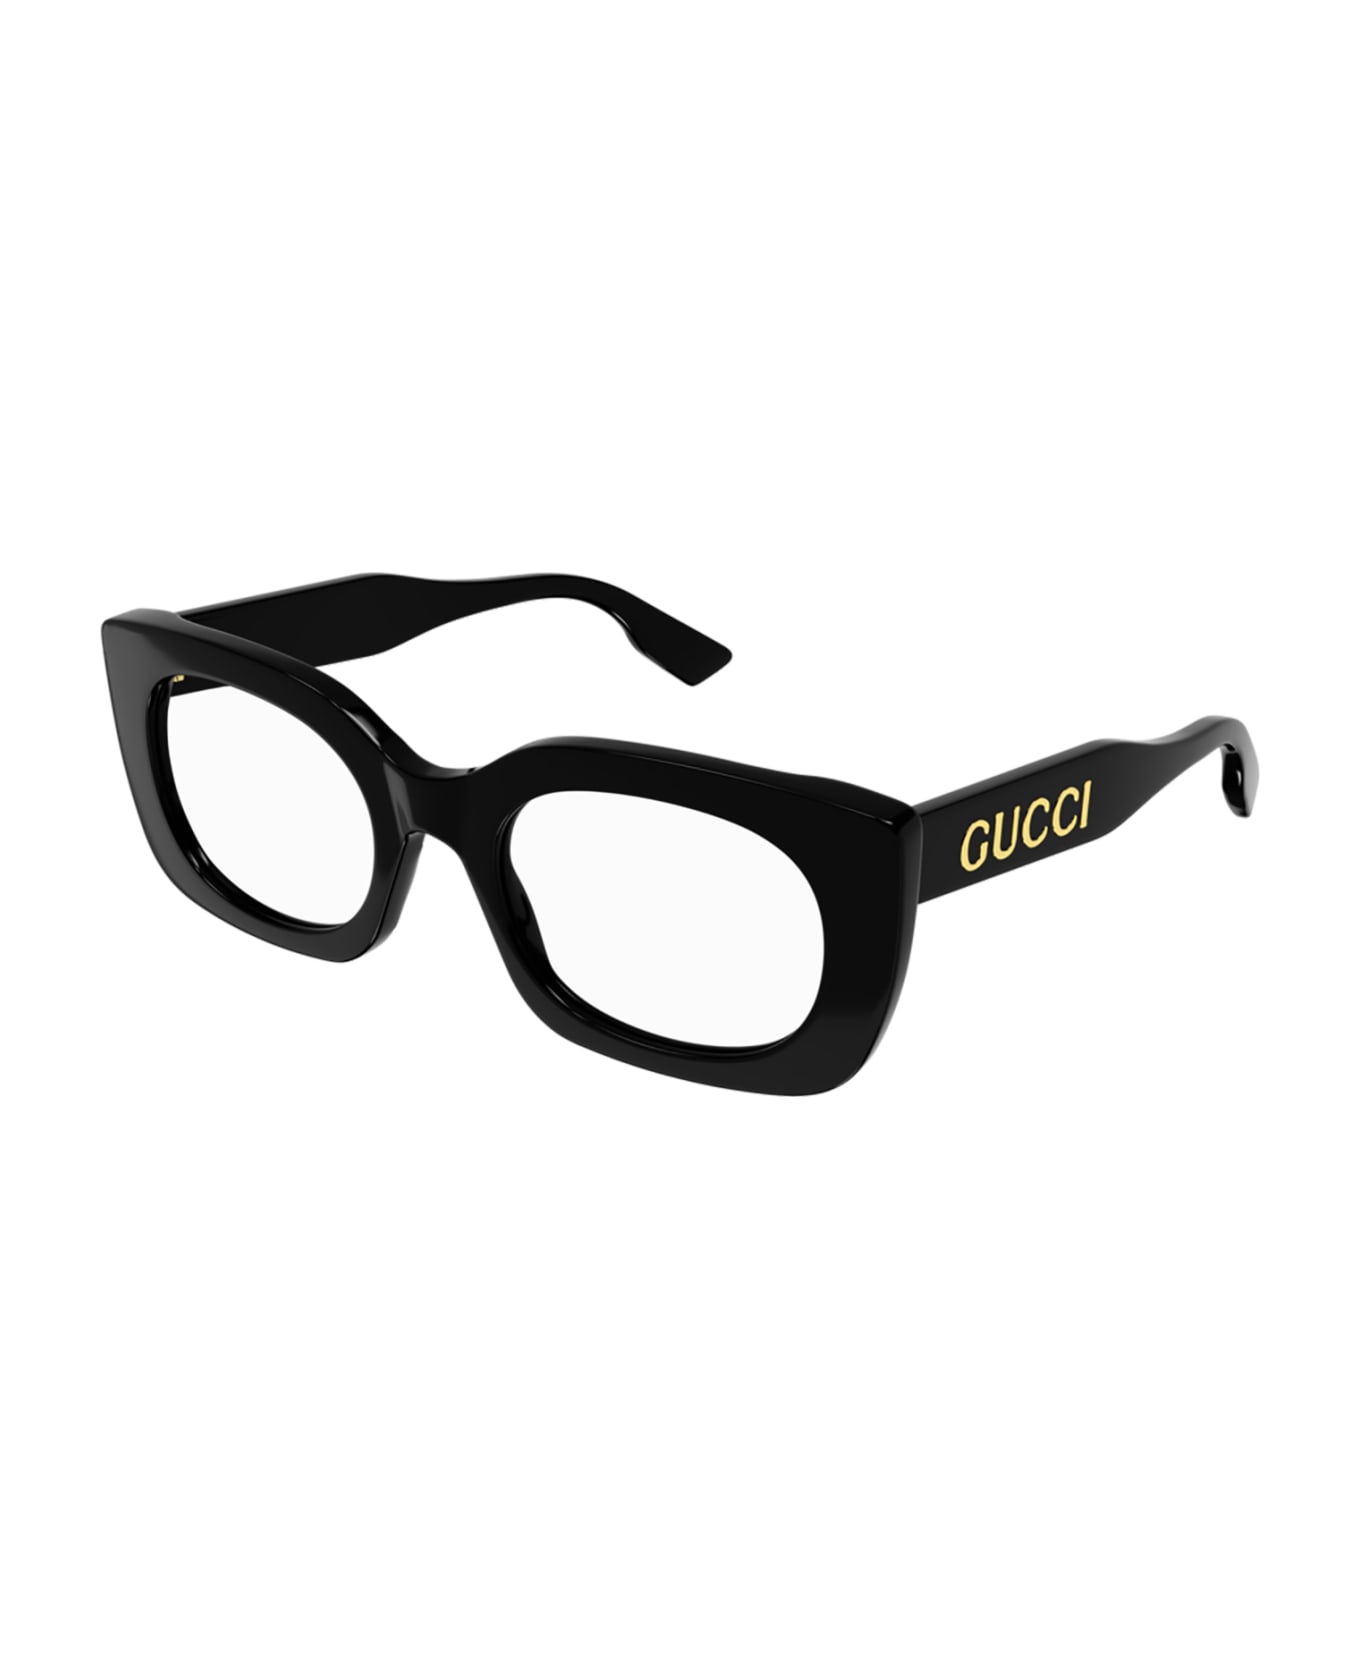 Gucci Eyewear 1car4d80a Glasses - 001 black black transpare